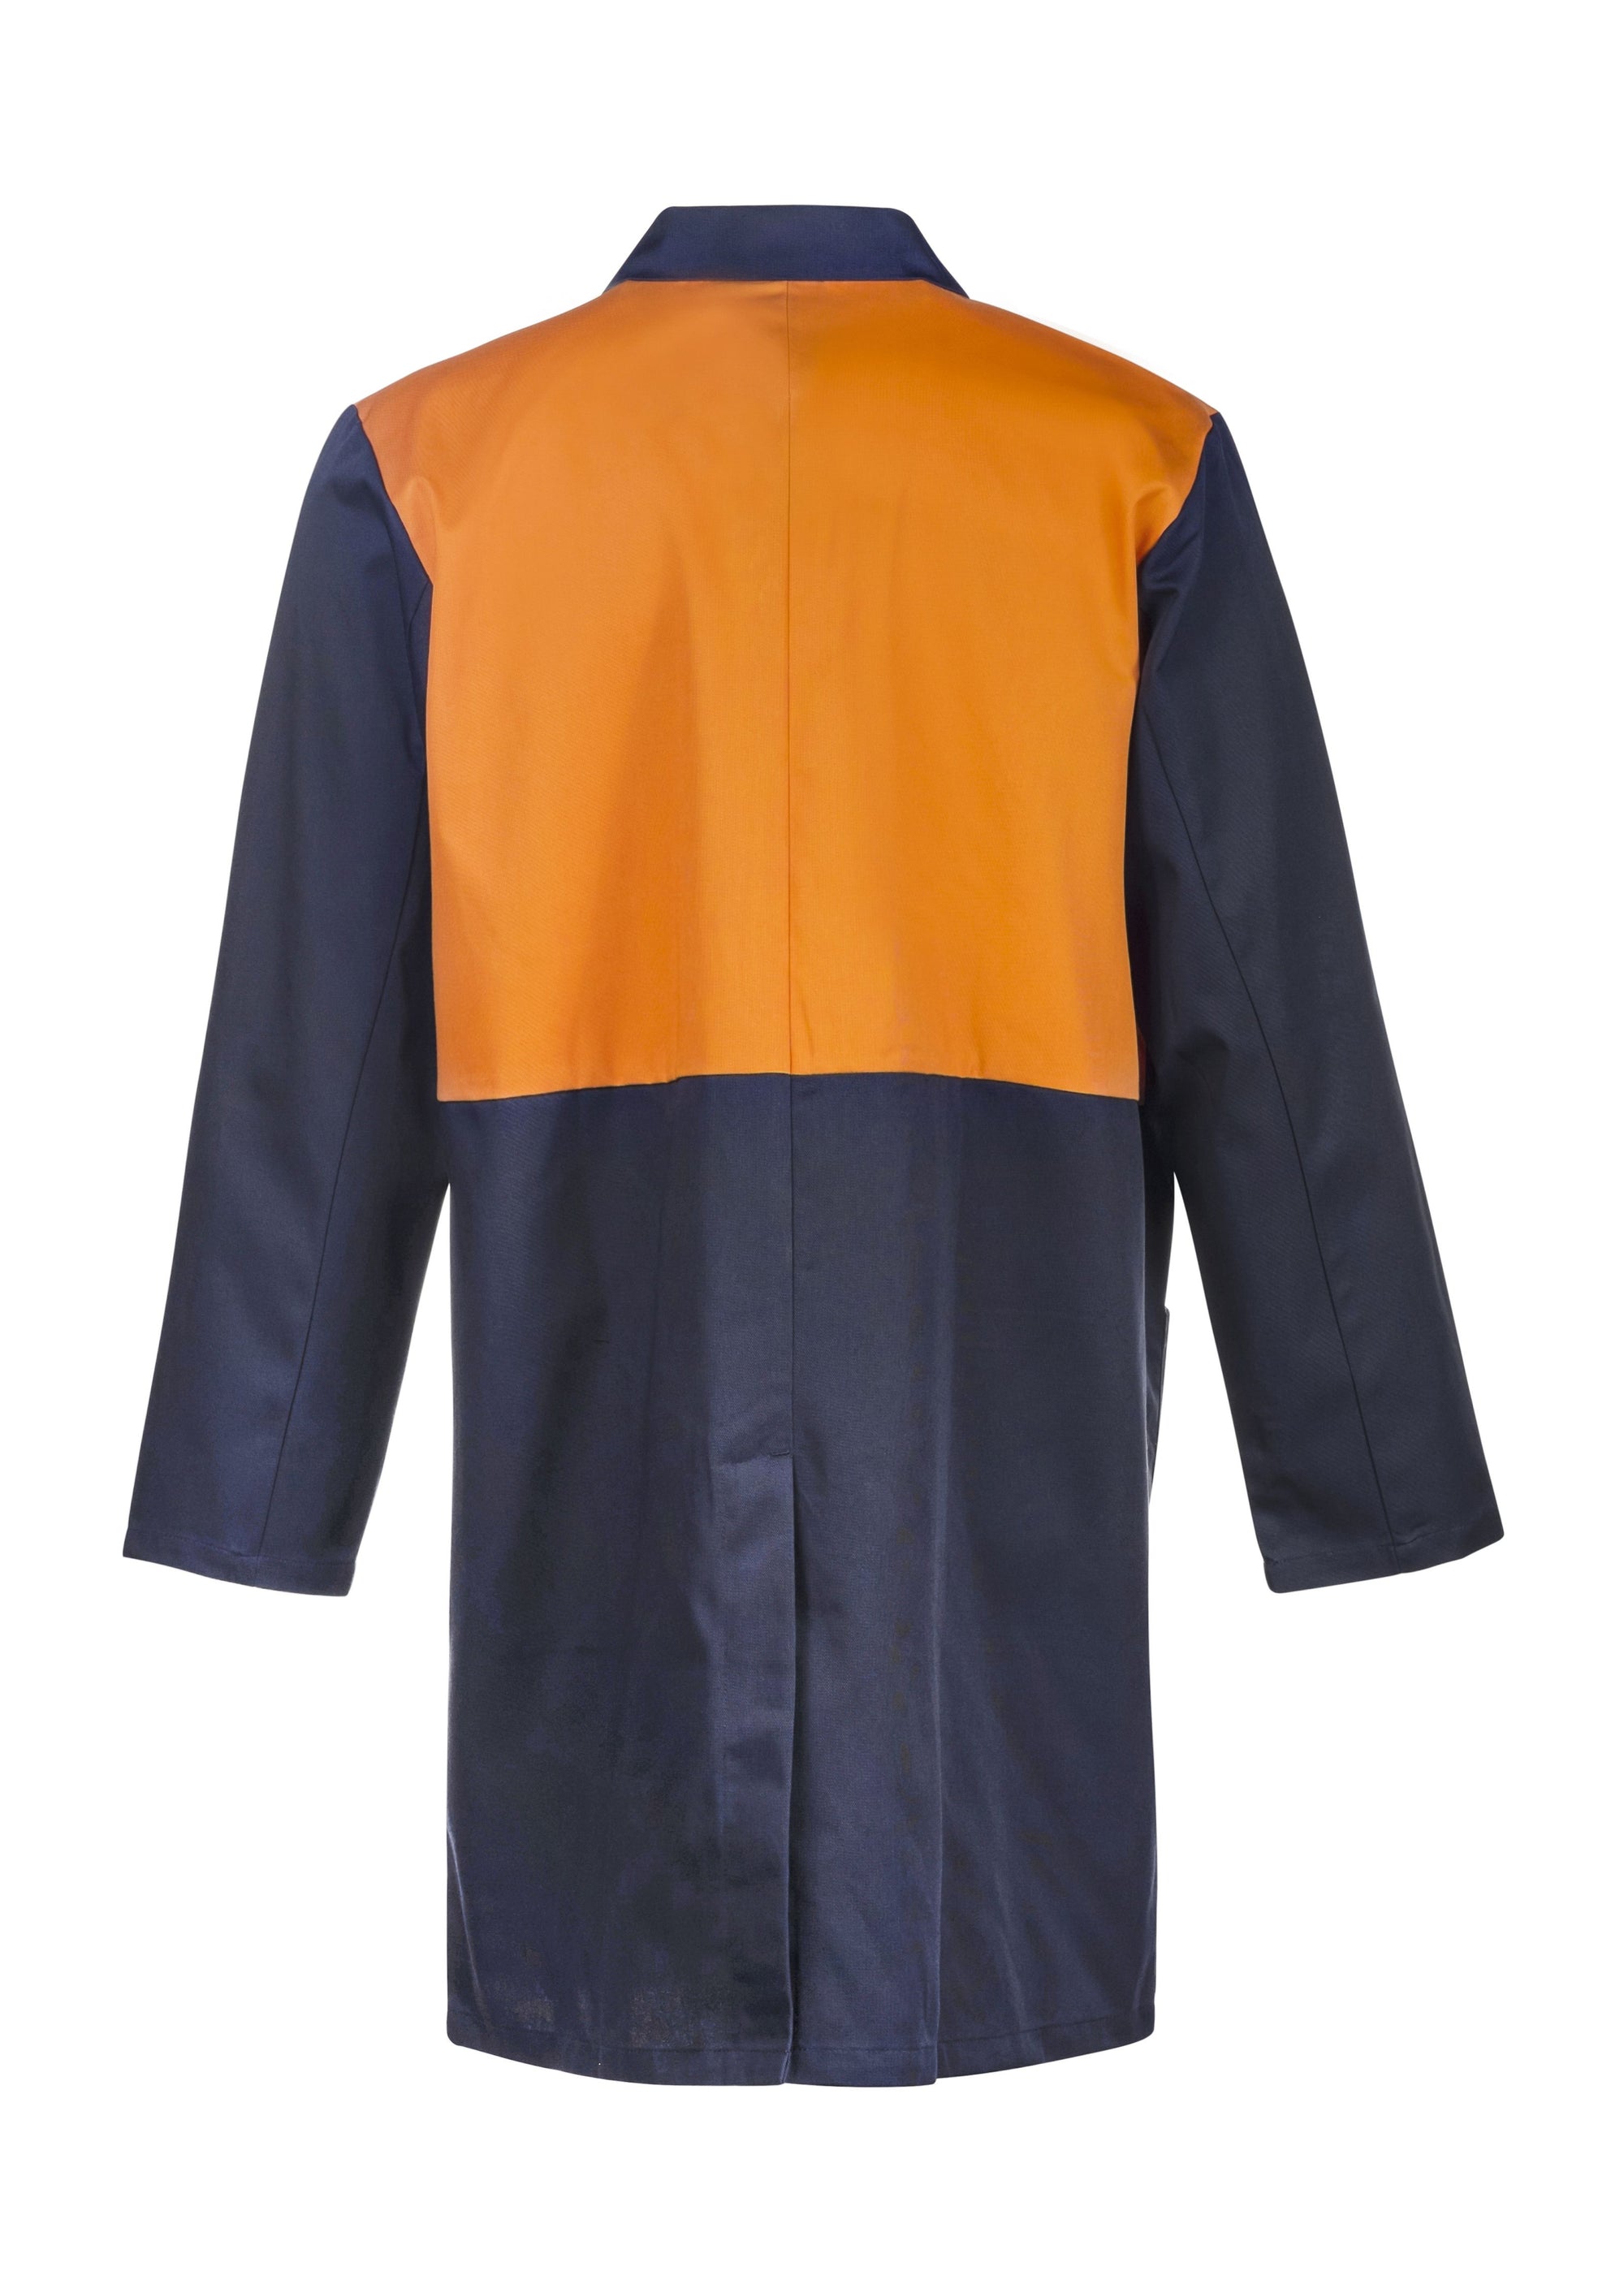 WorkCraft Mens Orange/Navy Dustcoat with Pockets ls 220g L